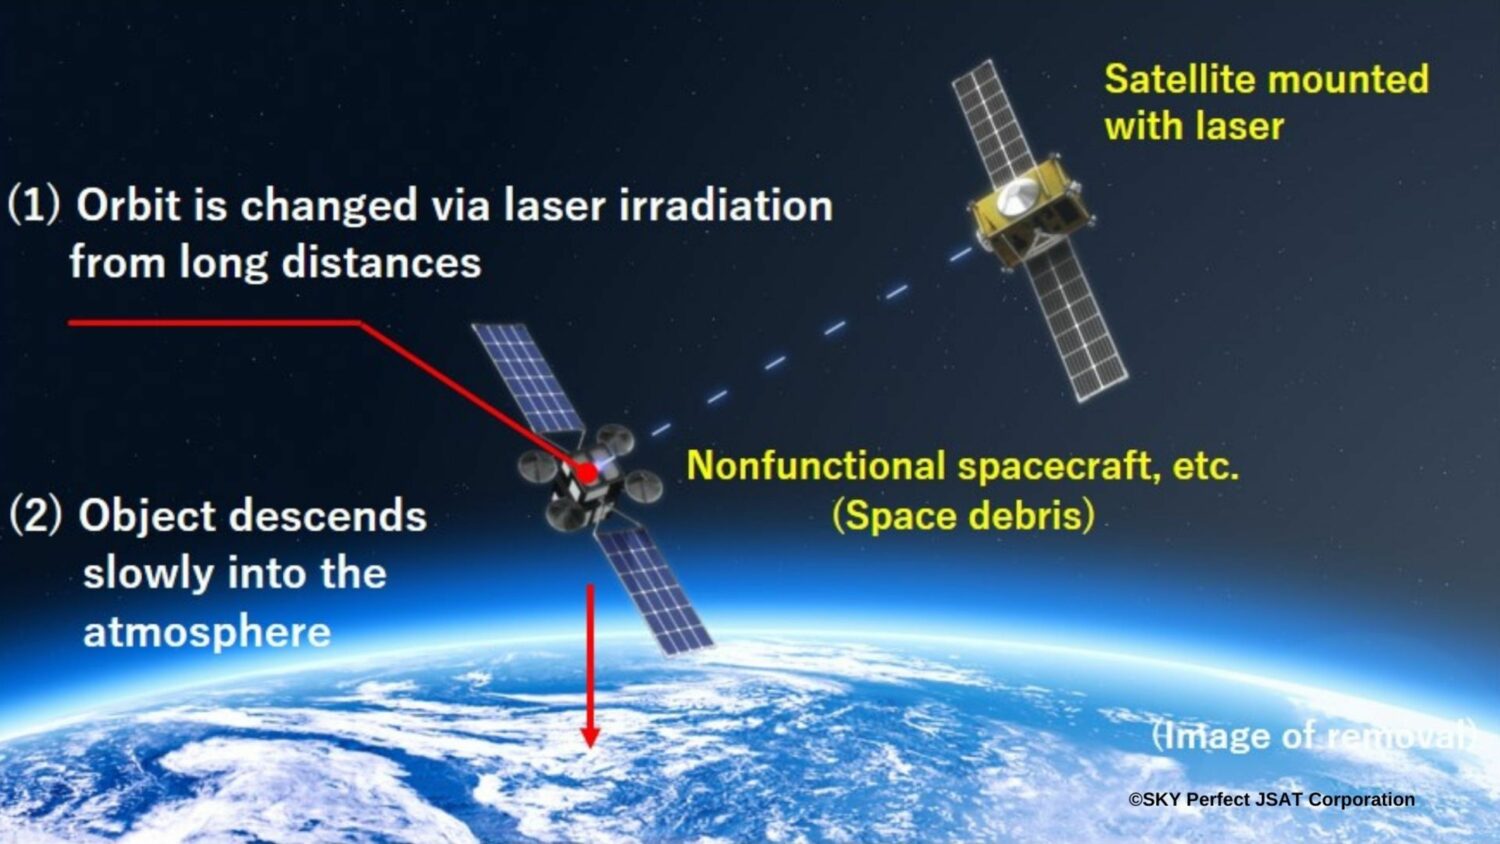 Laser Satellite-CSKY Perfect JSAT Corporation -jpg